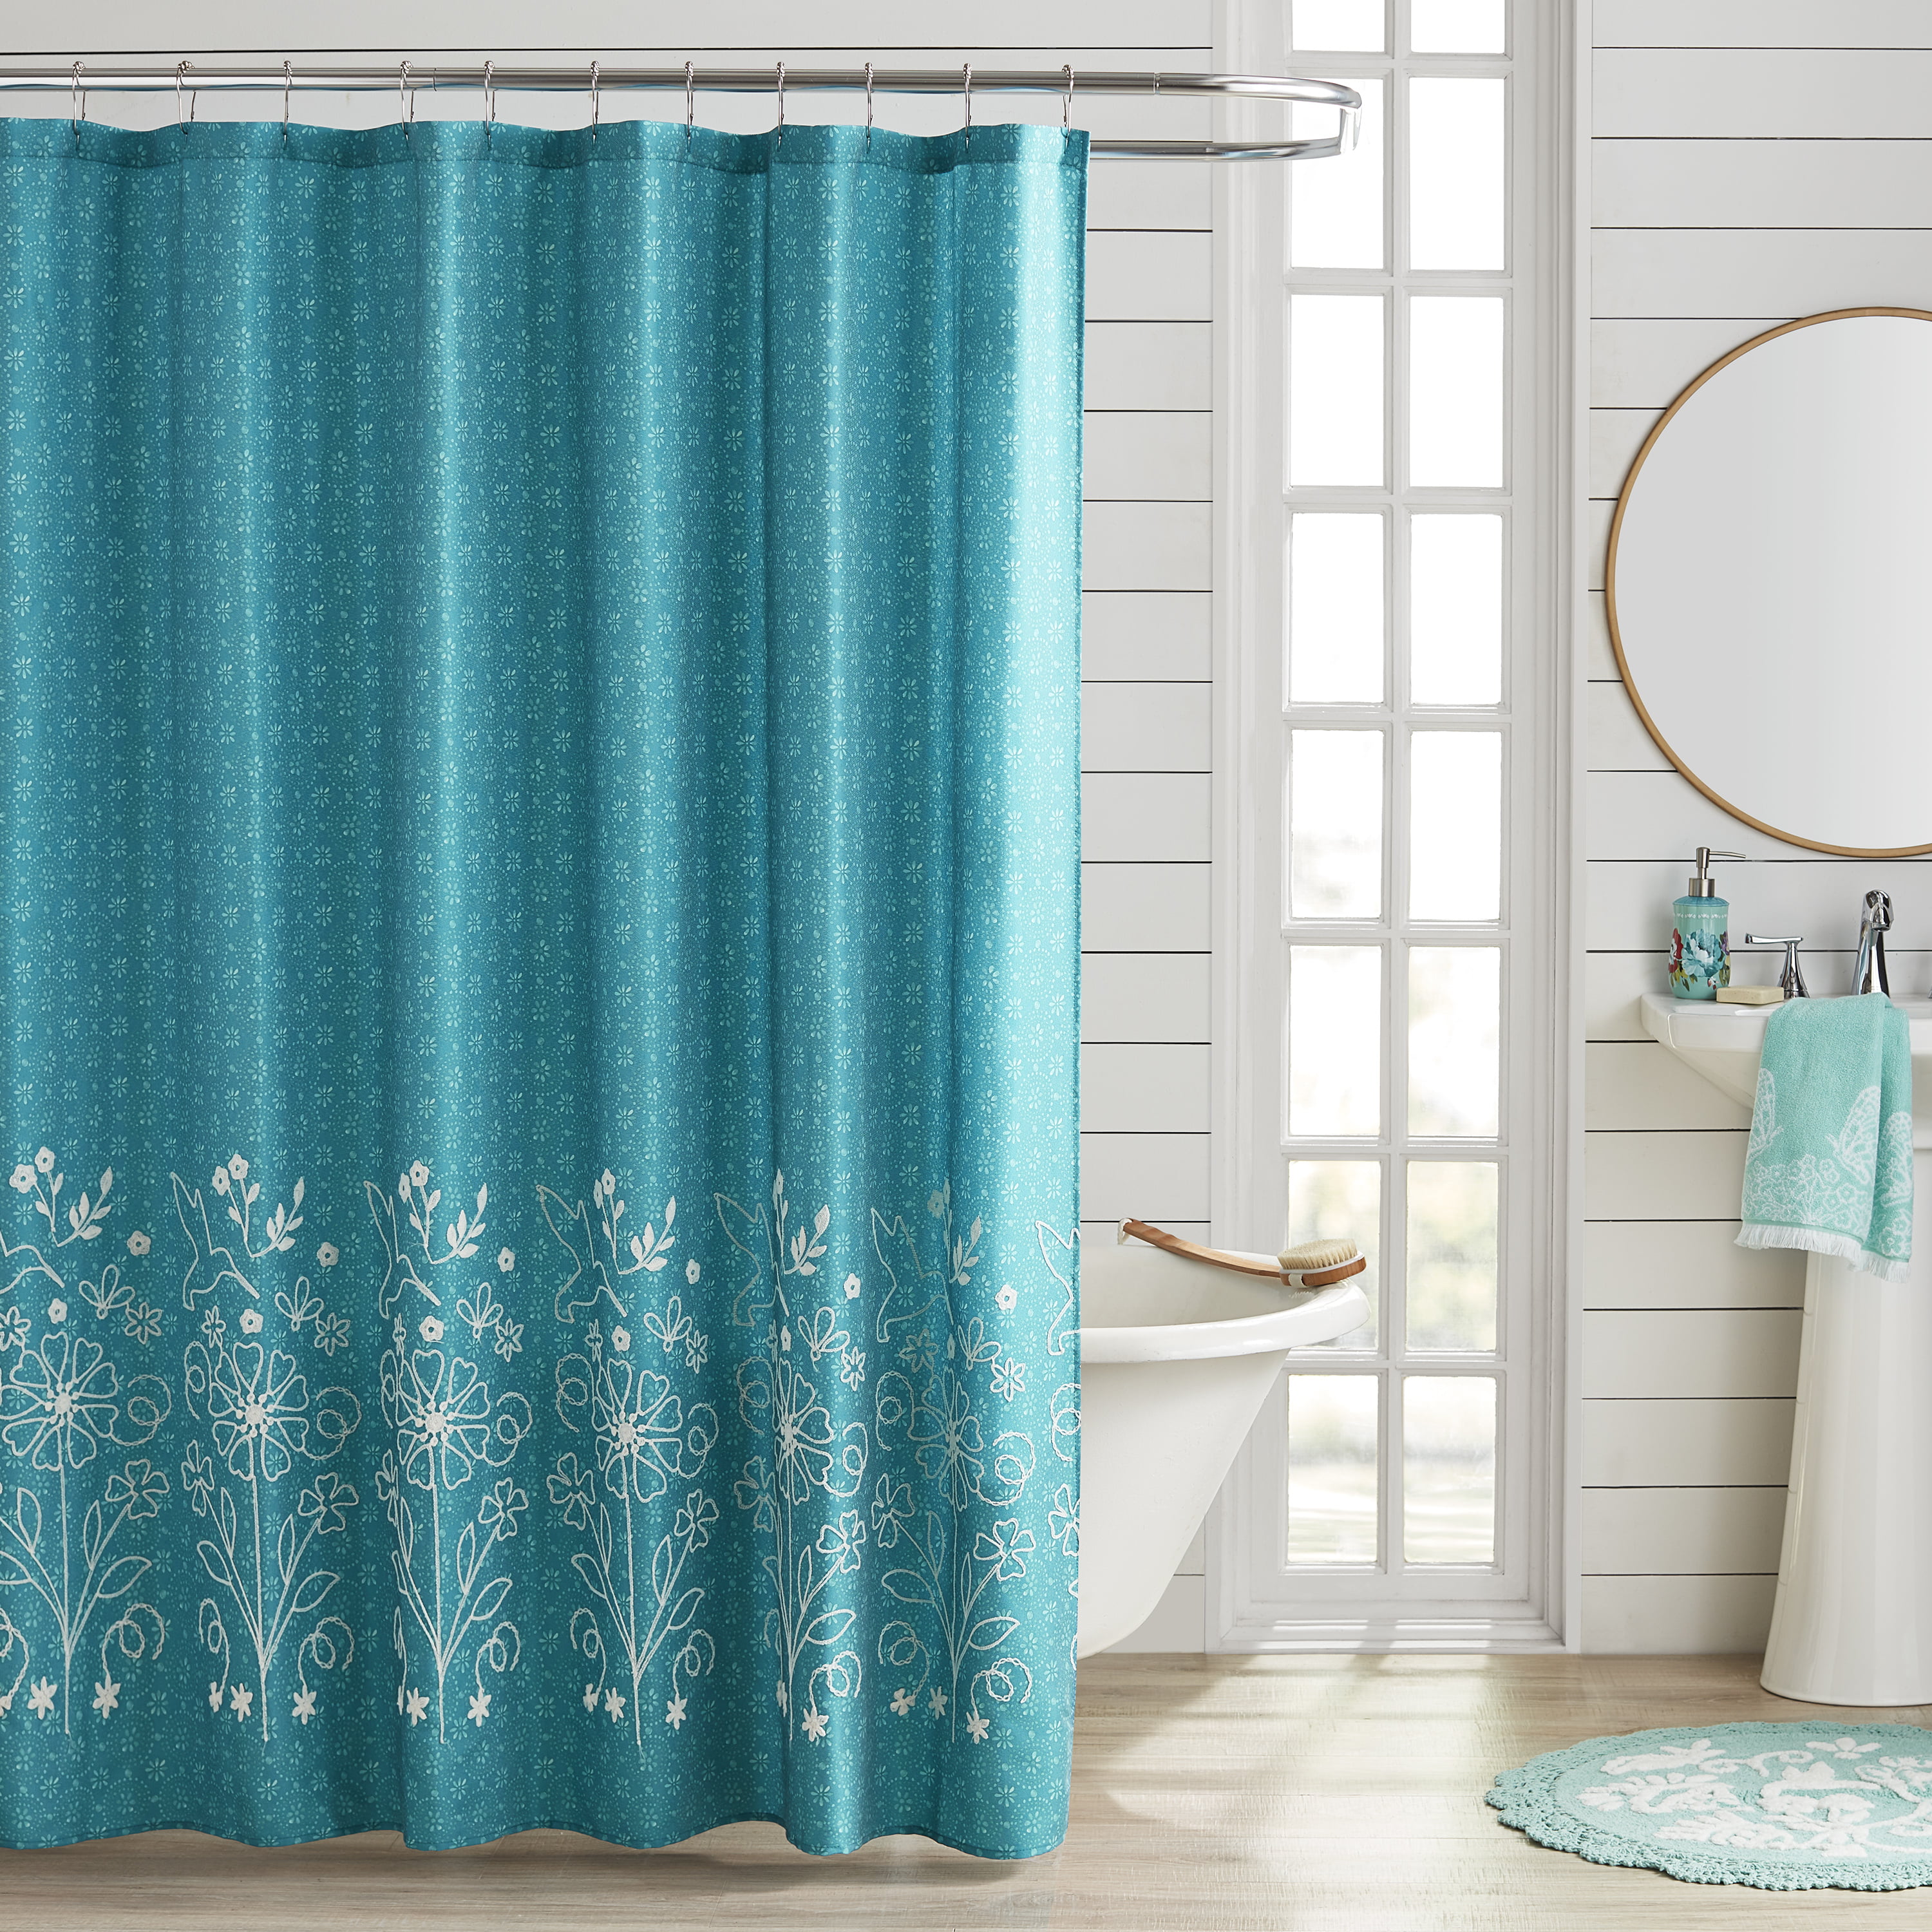 Baseball Bath Curtain Home Decor Polyester Fabric Shower Curtain Liner Bath Mat 